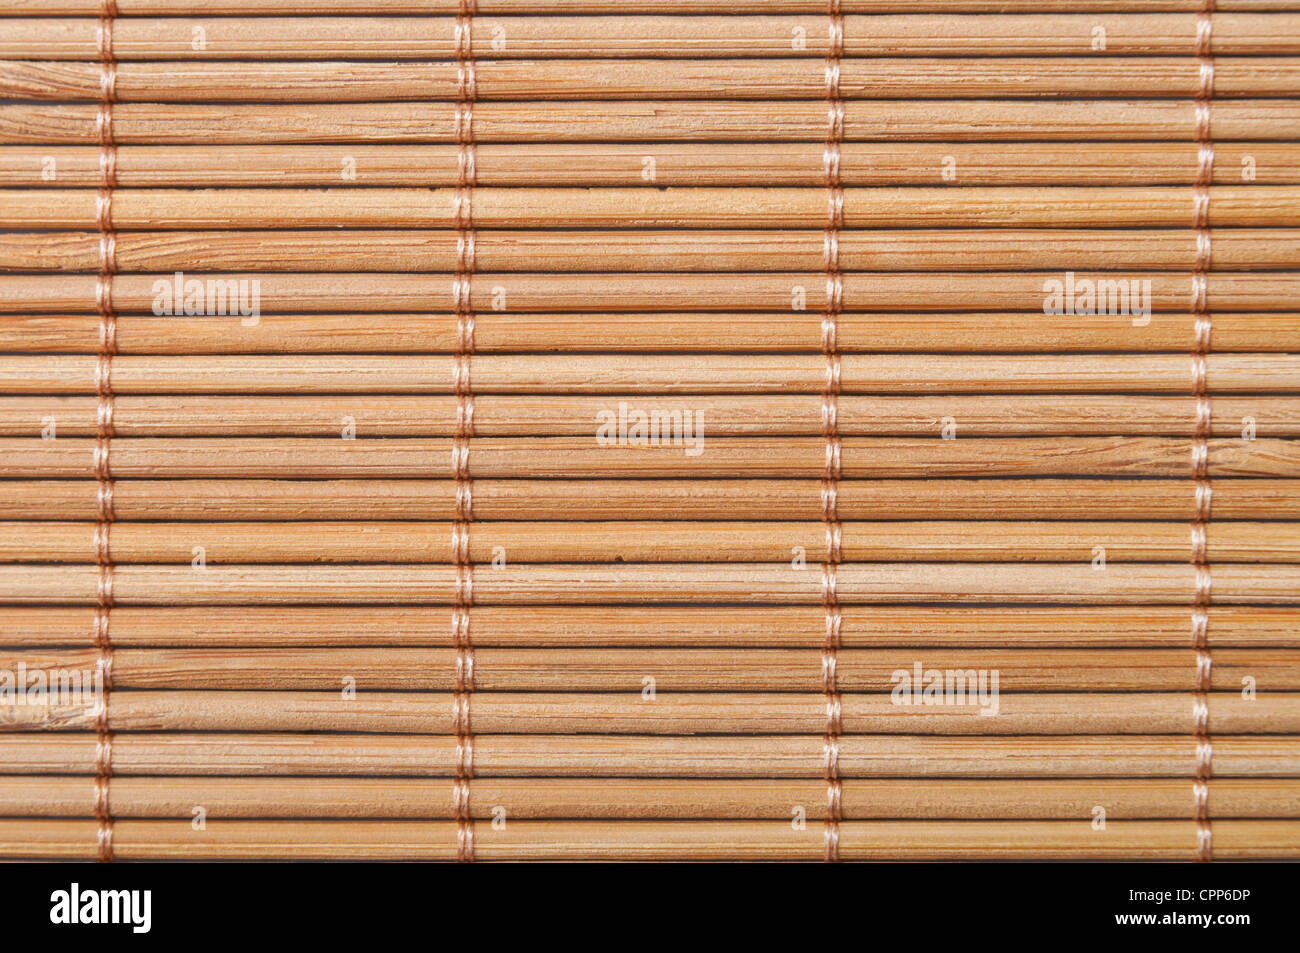 Tappetino di bambù sfondo Foto Stock